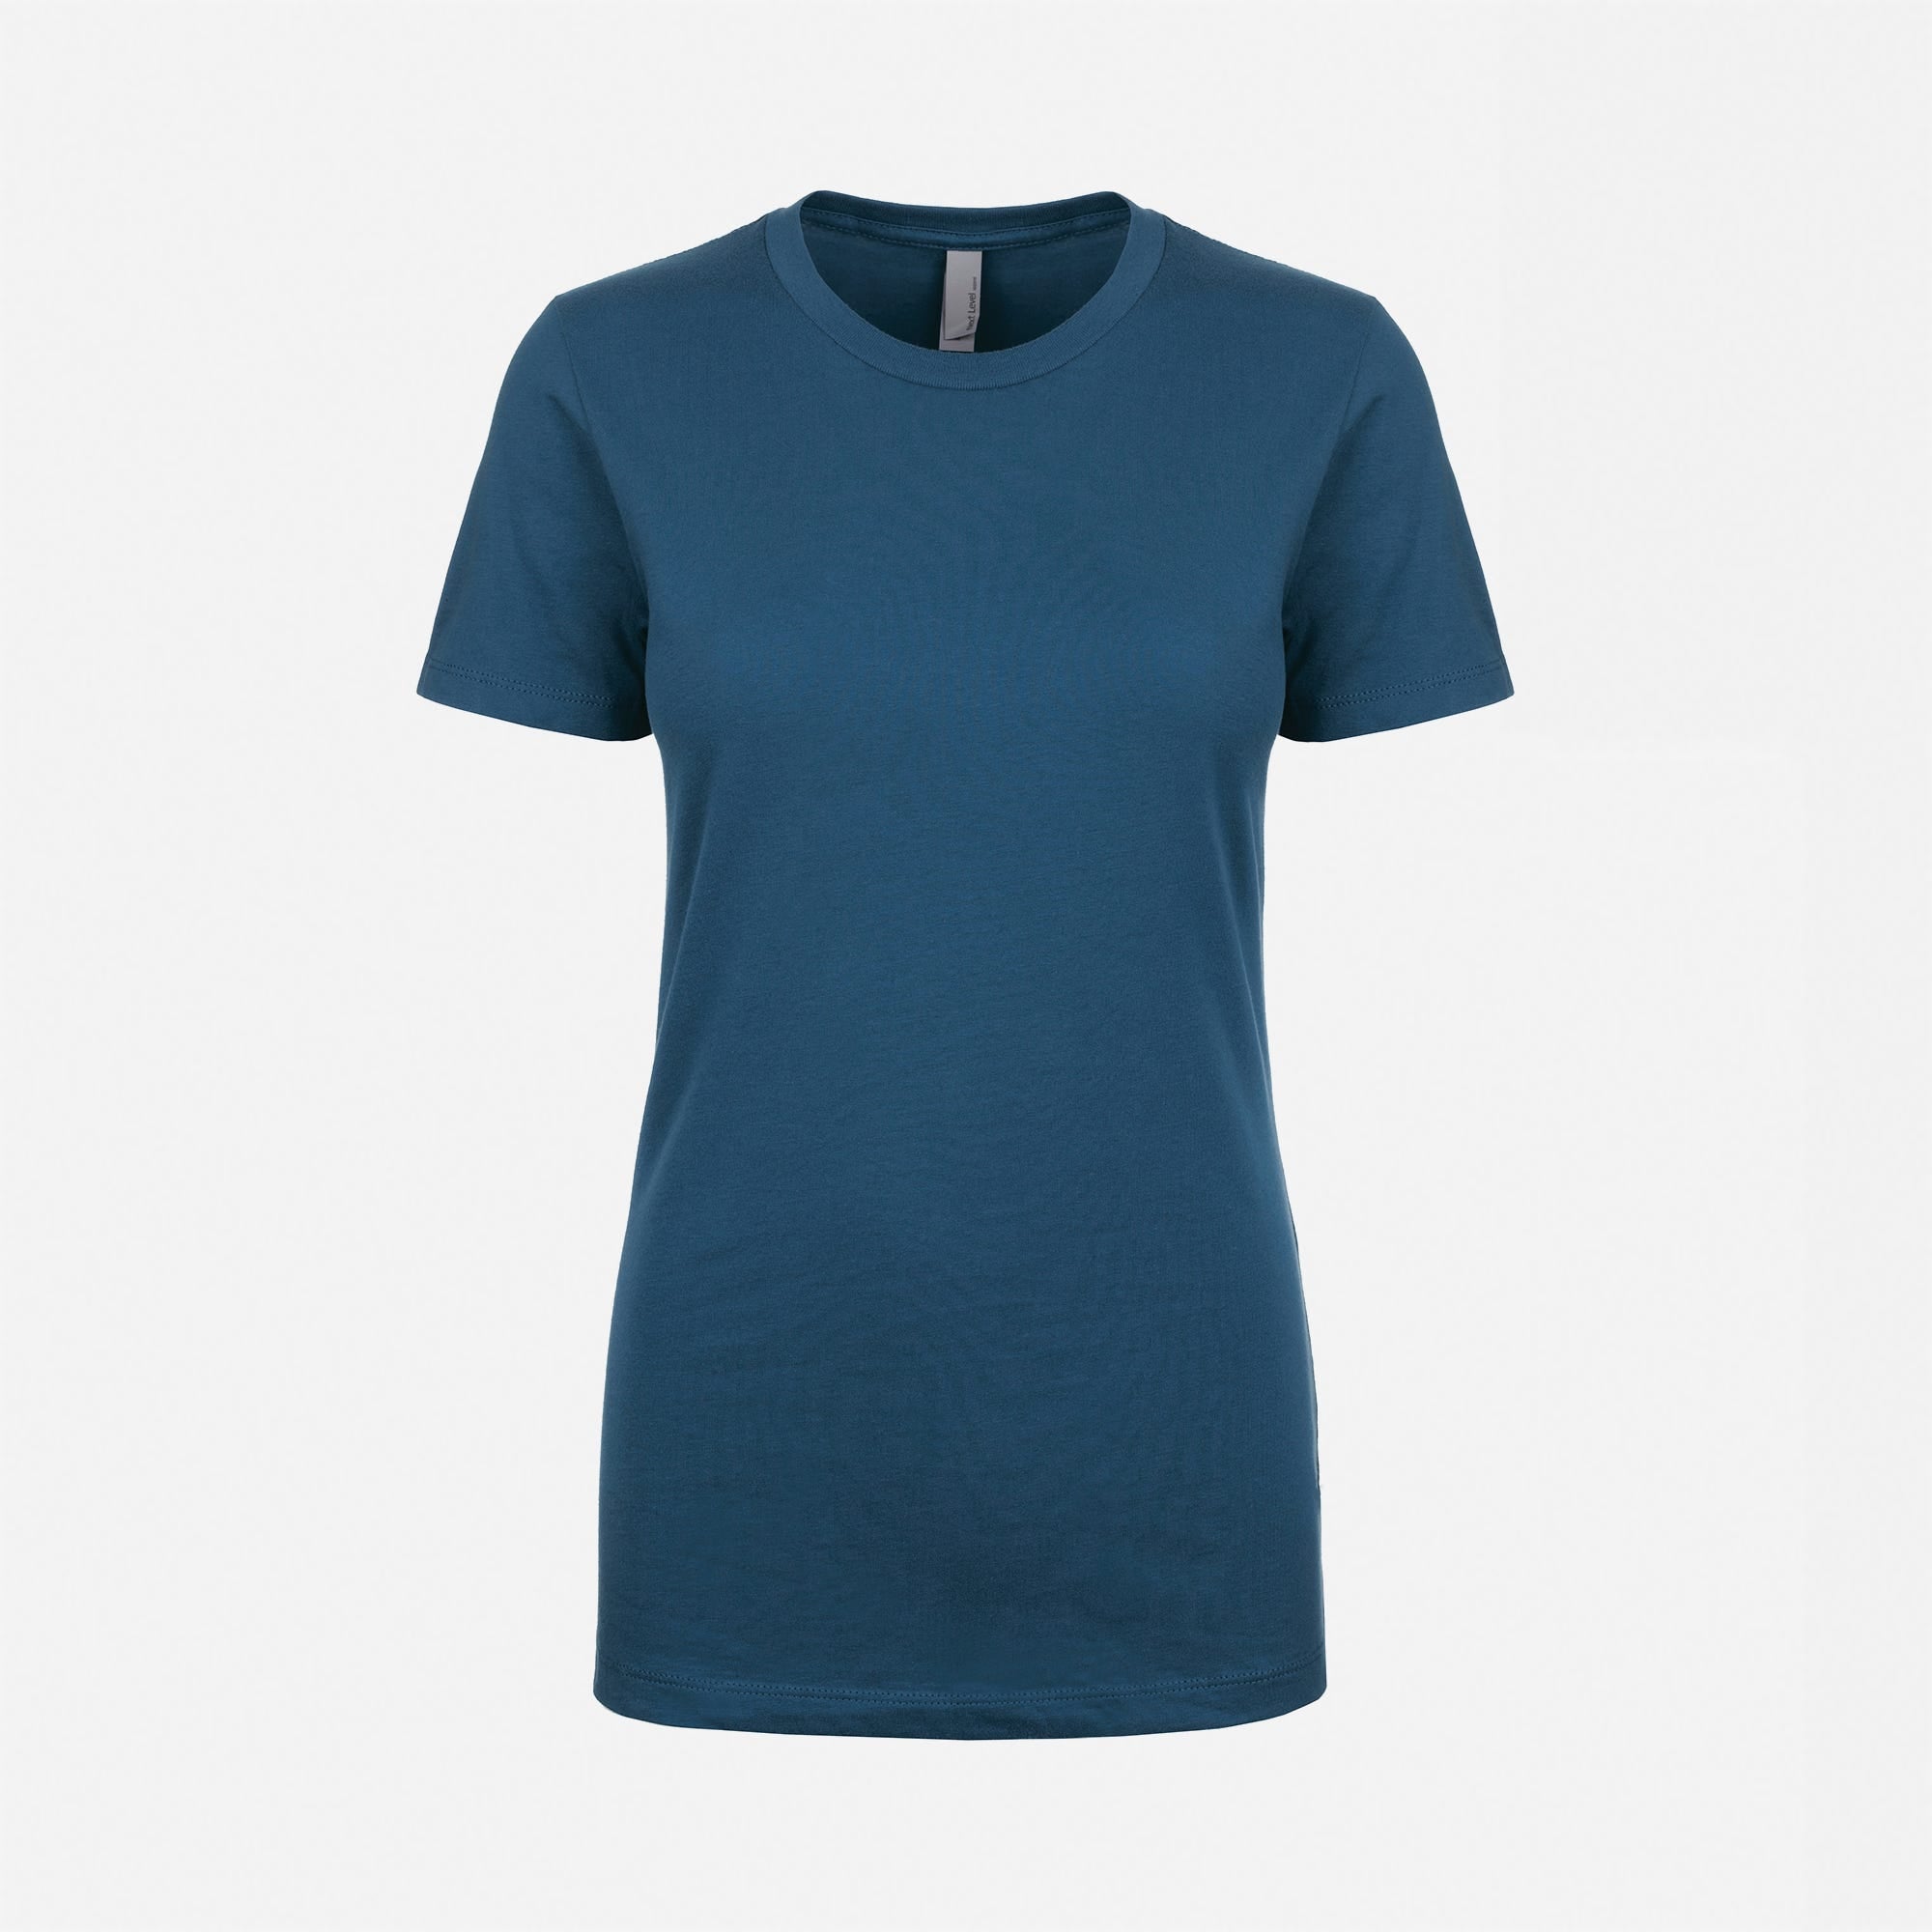 Cotton Boyfriend T-Shirt Cool Blue Next Level Apparel Women size